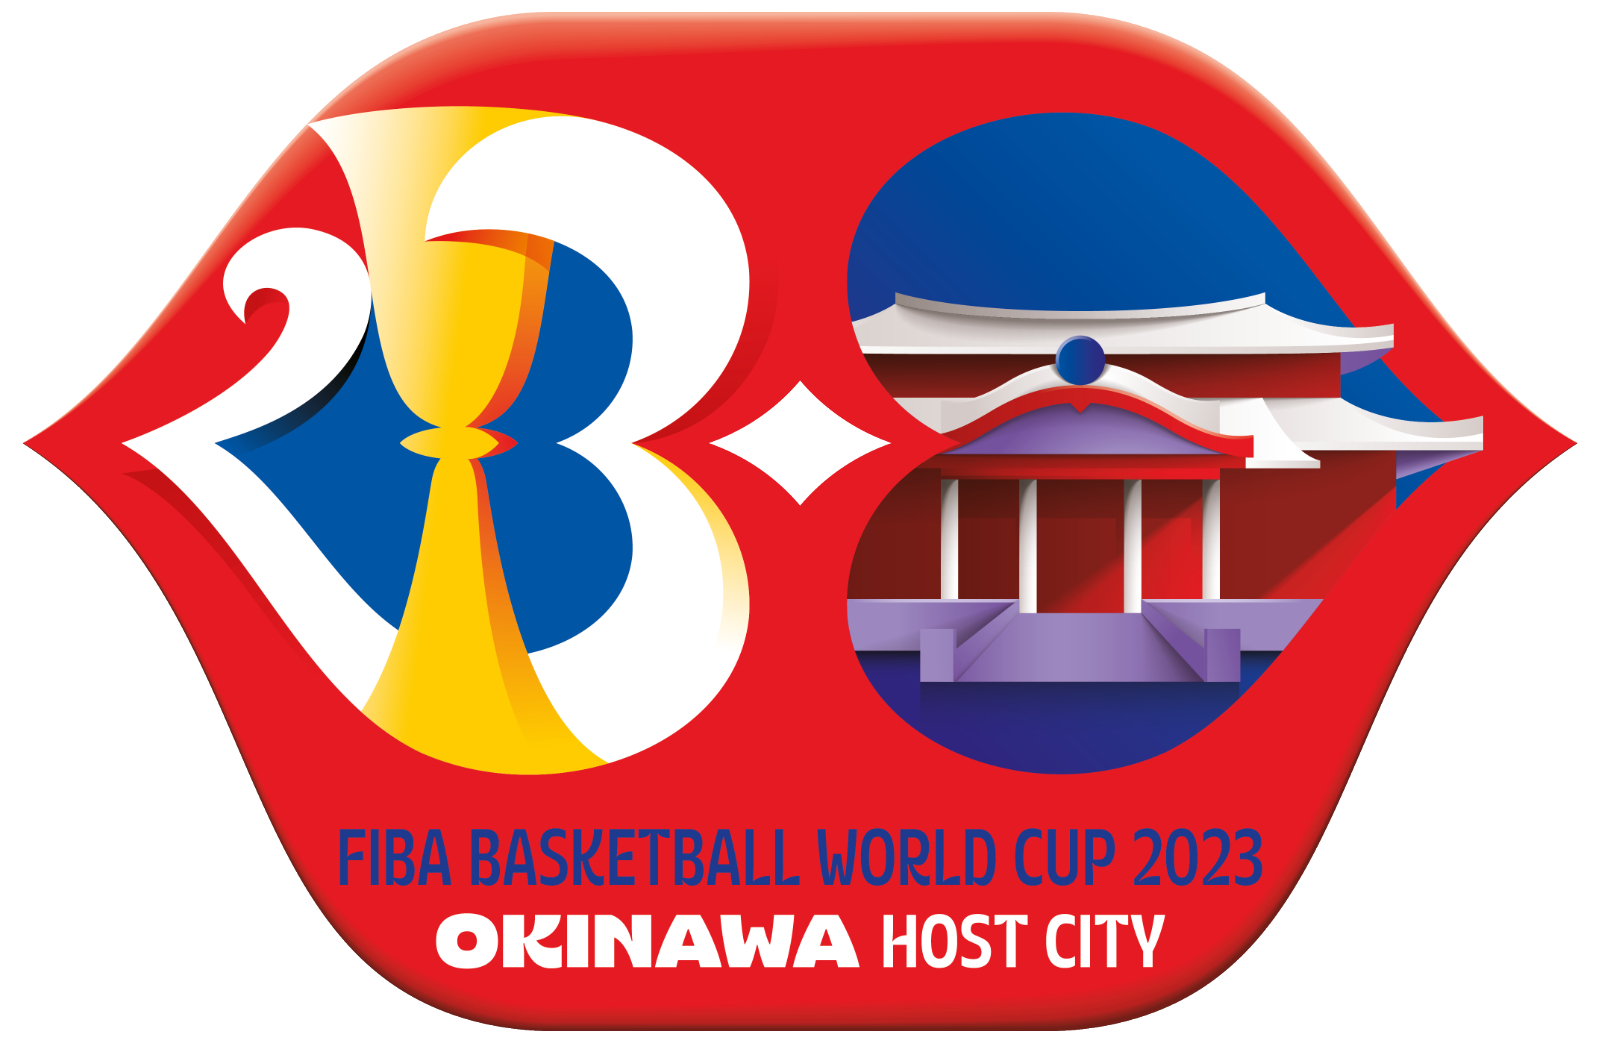 FIBAバスケットボールワールドカップ2023大会ロゴとホストシティーロゴ発表 バスケ情報ならバスナビ